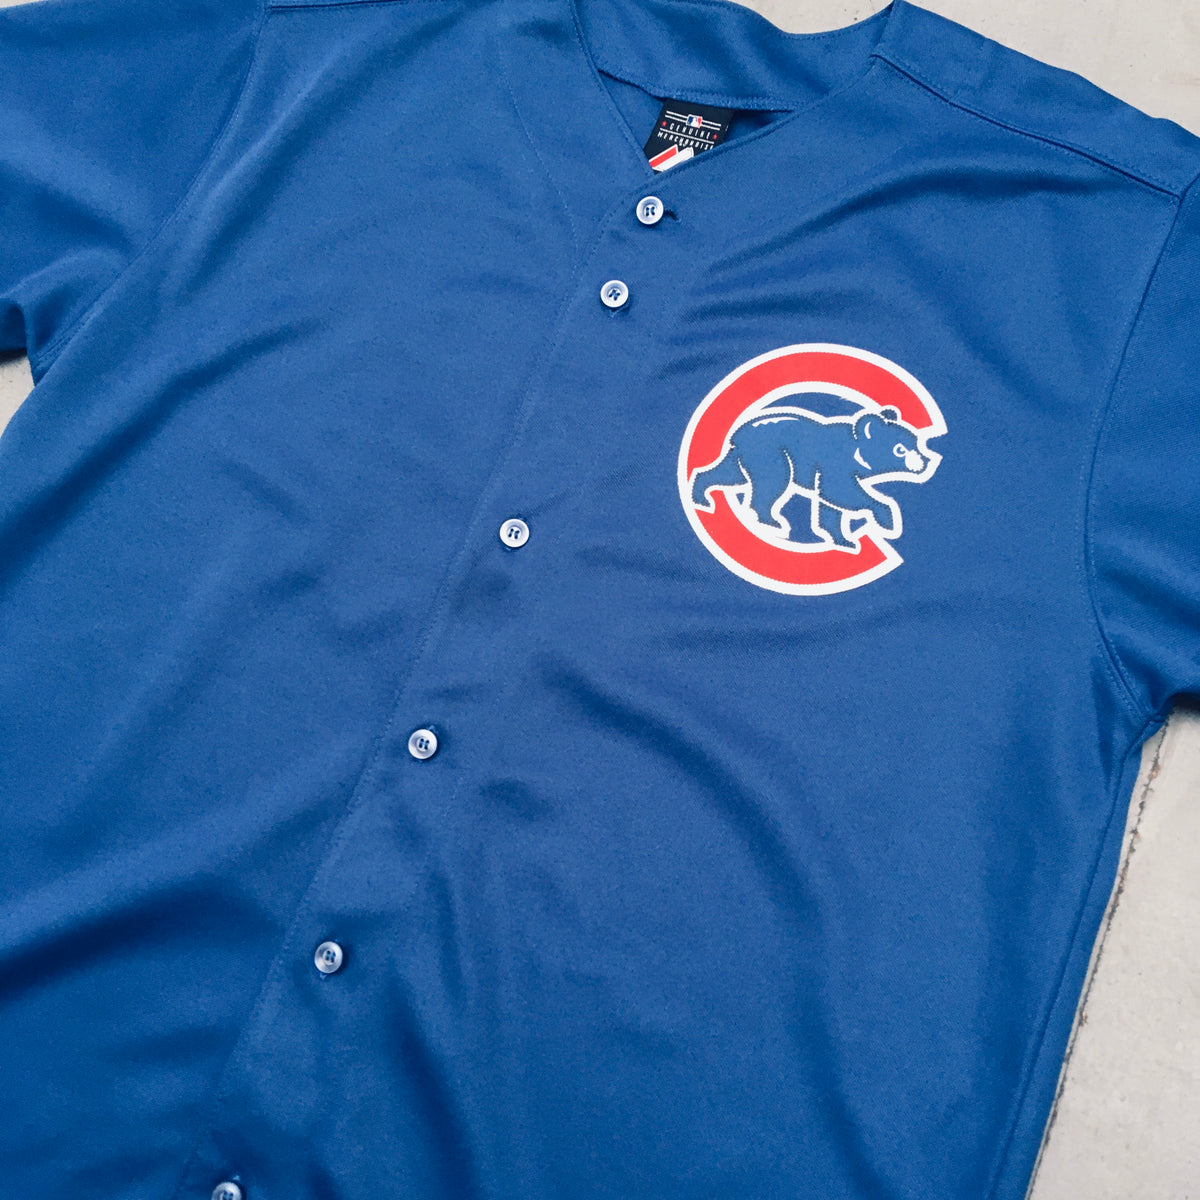 chicago cubs alternate jersey